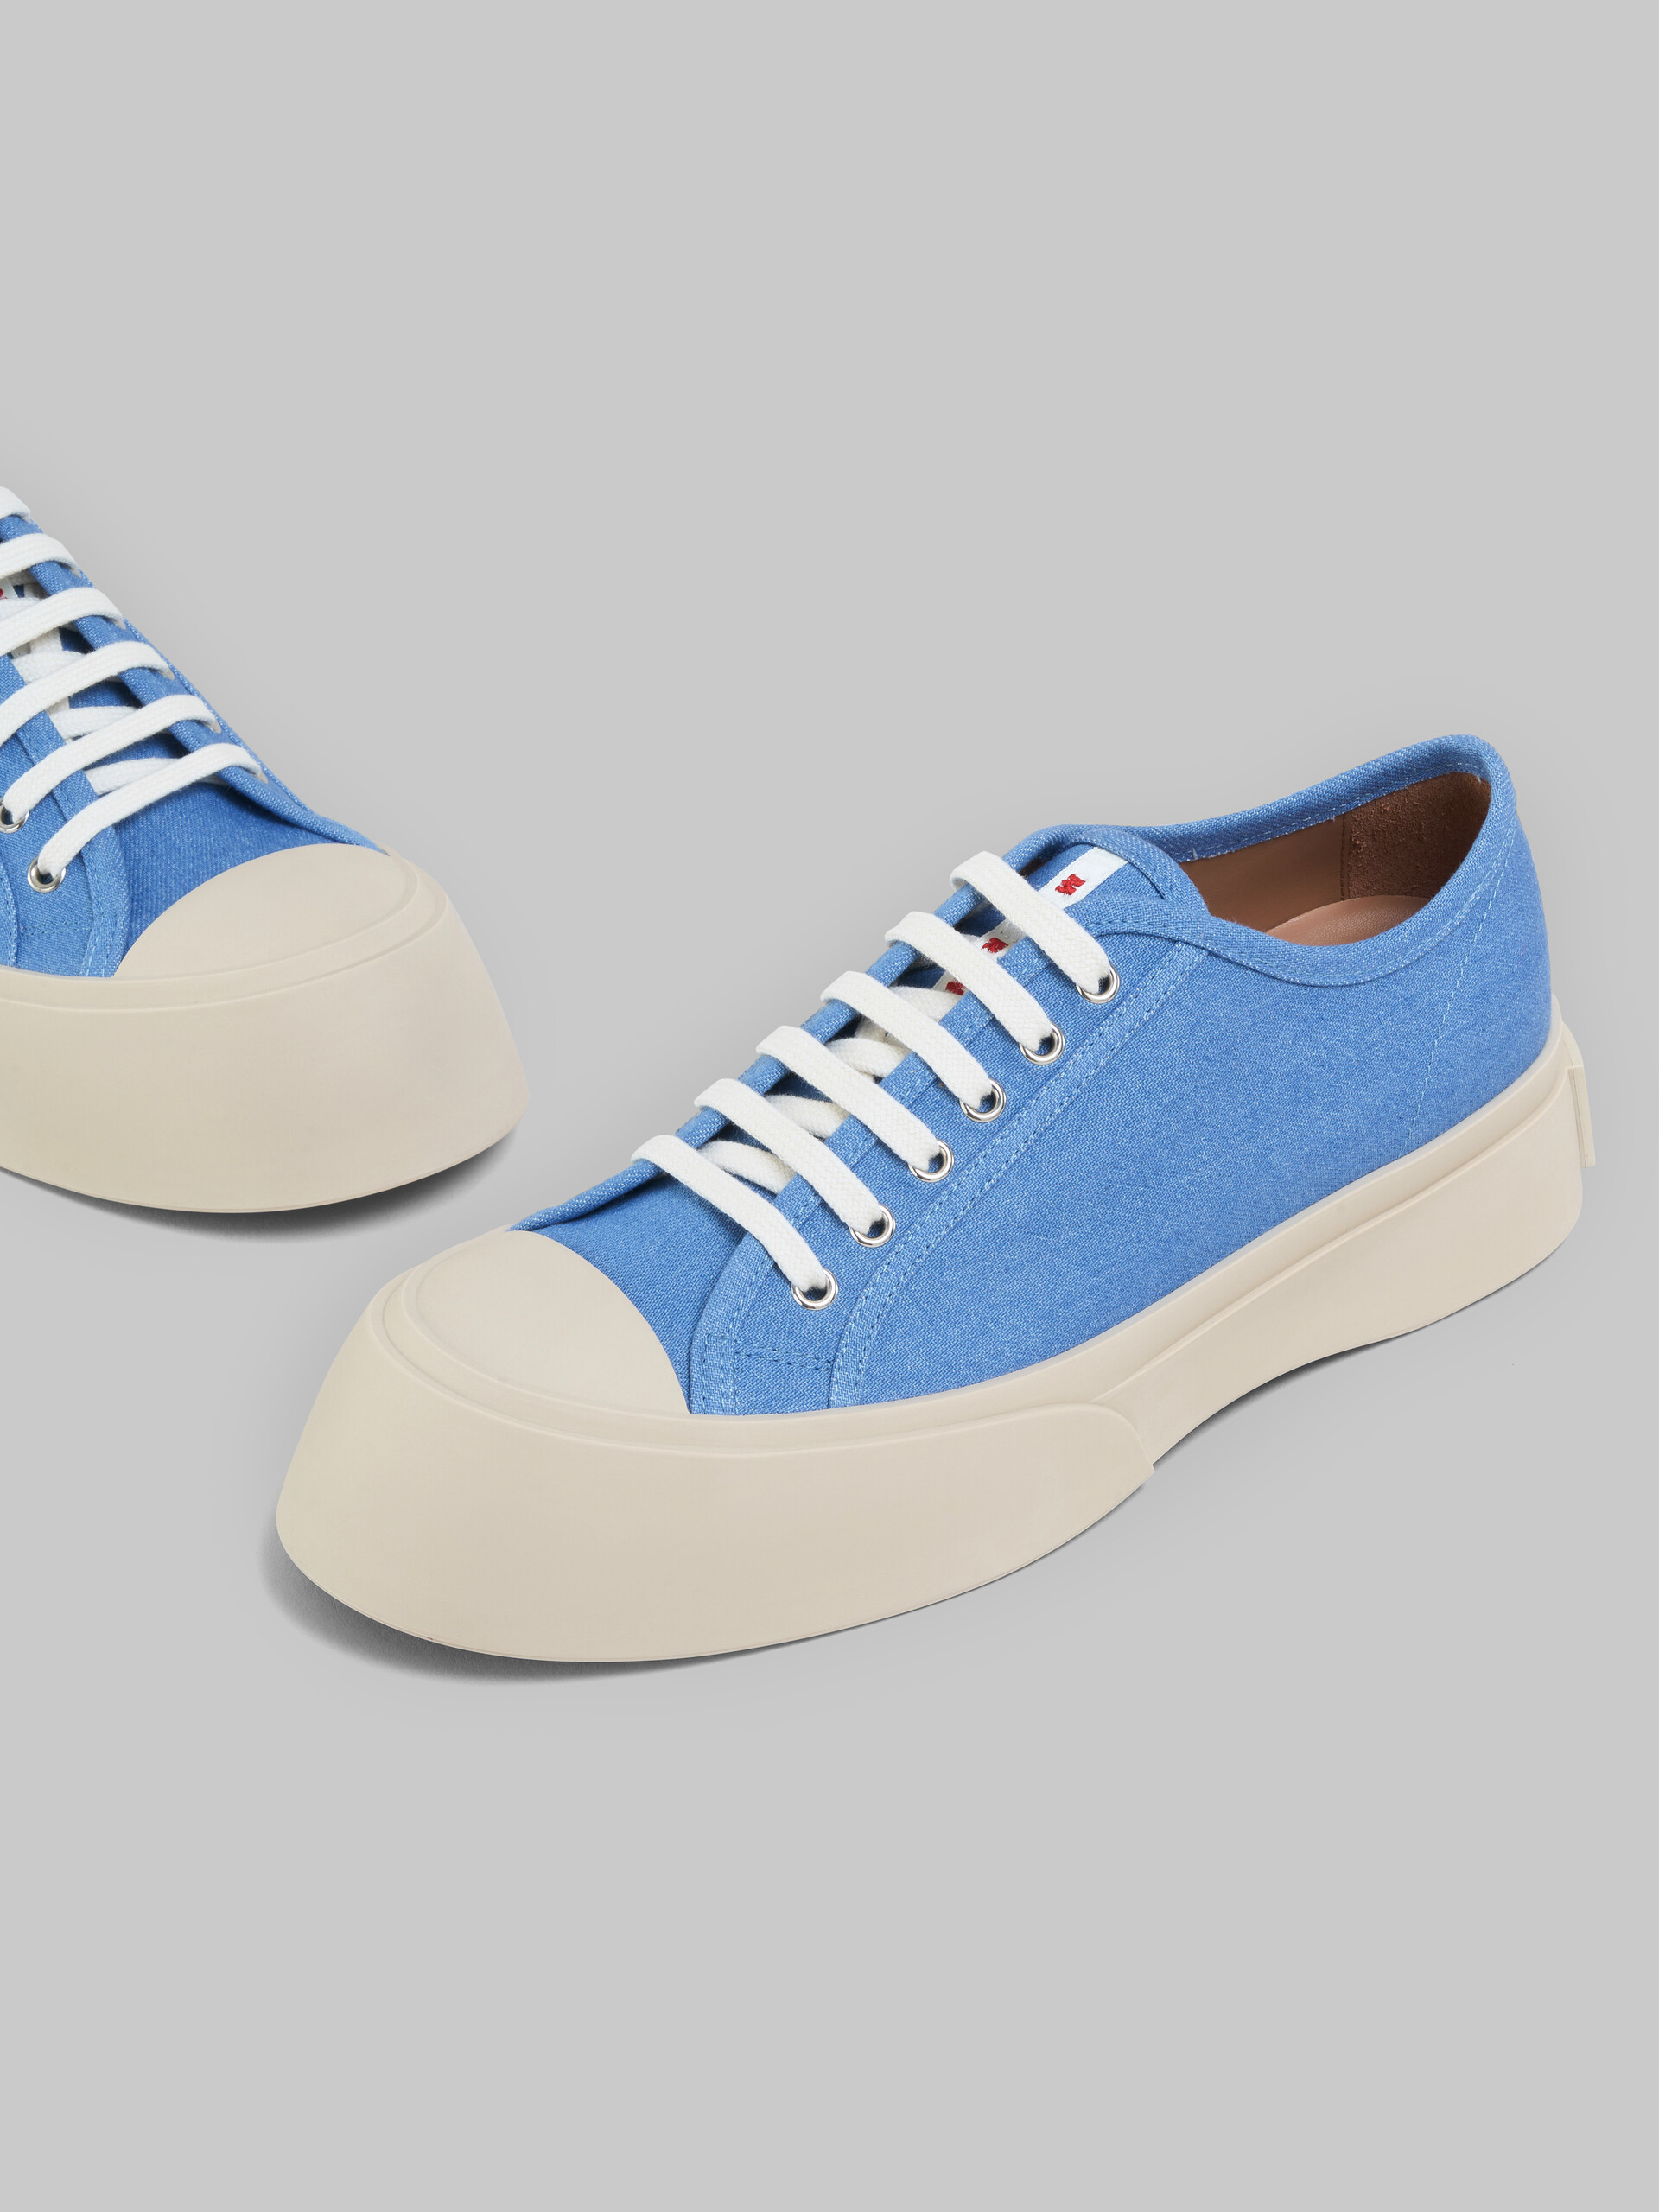 Sneaker Pablo in denim azzurro chiaro - Sneakers - Image 5